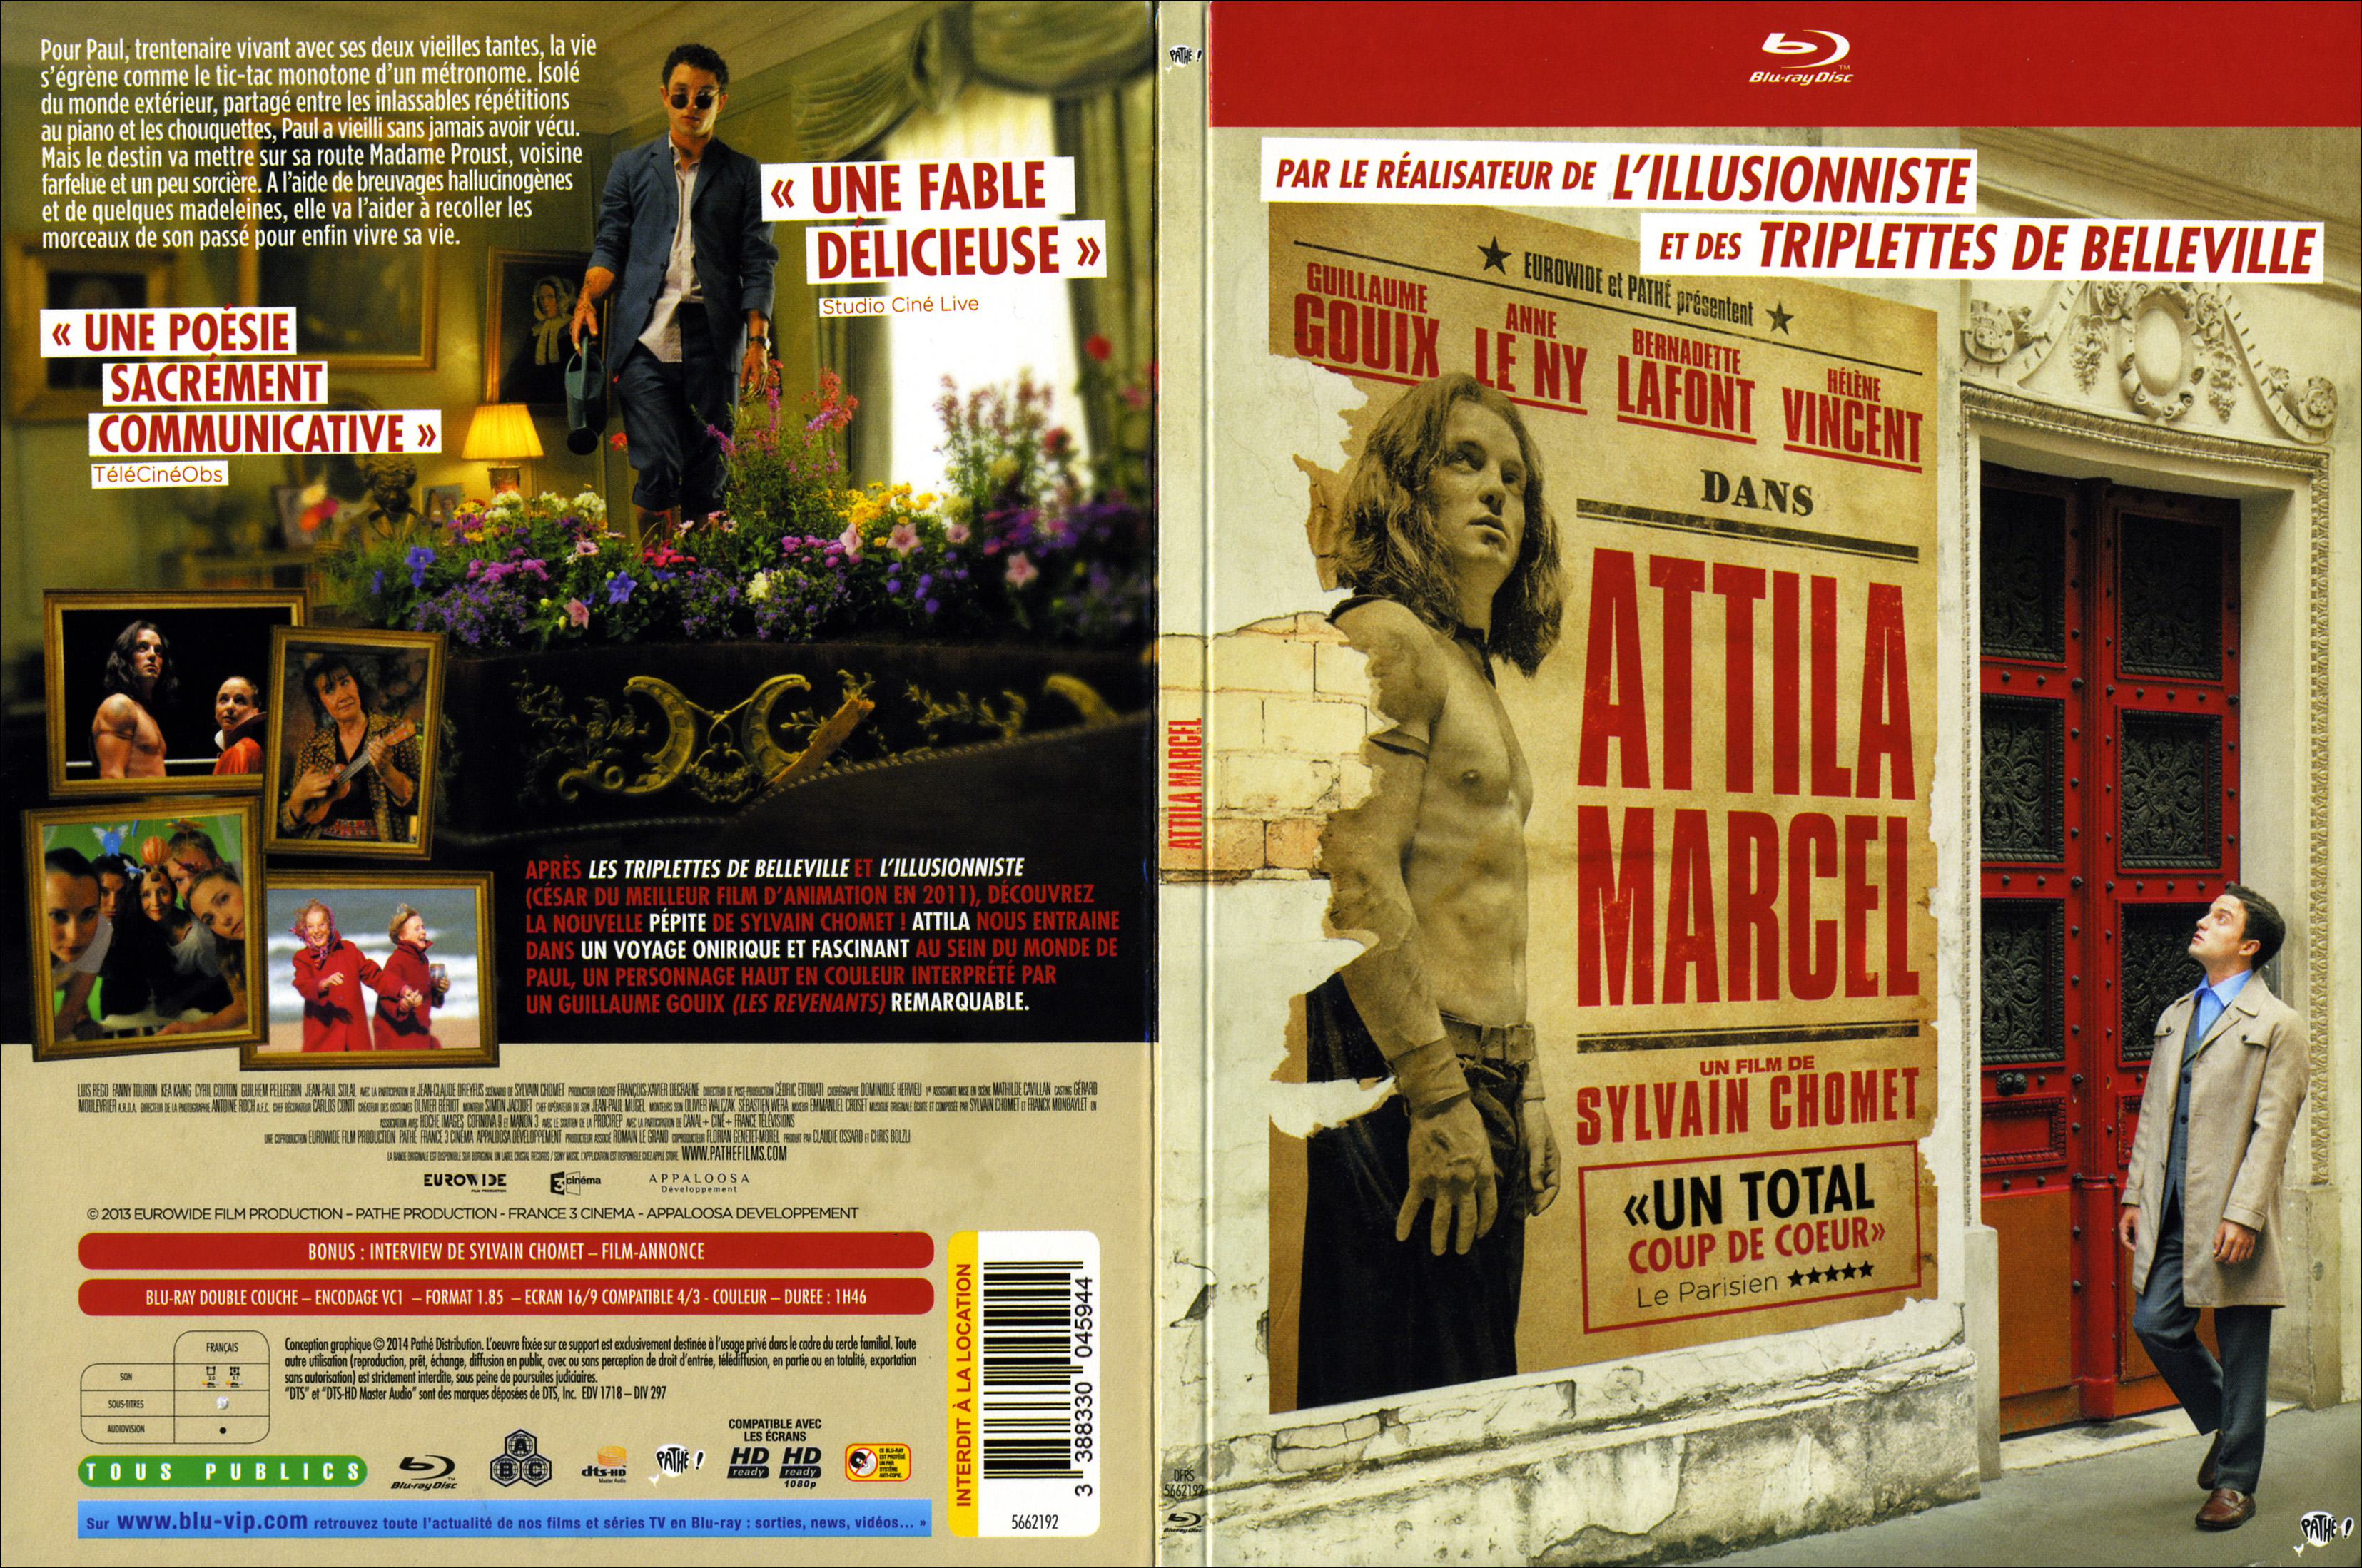 Jaquette DVD Attila Marcel (BLU-RAY)